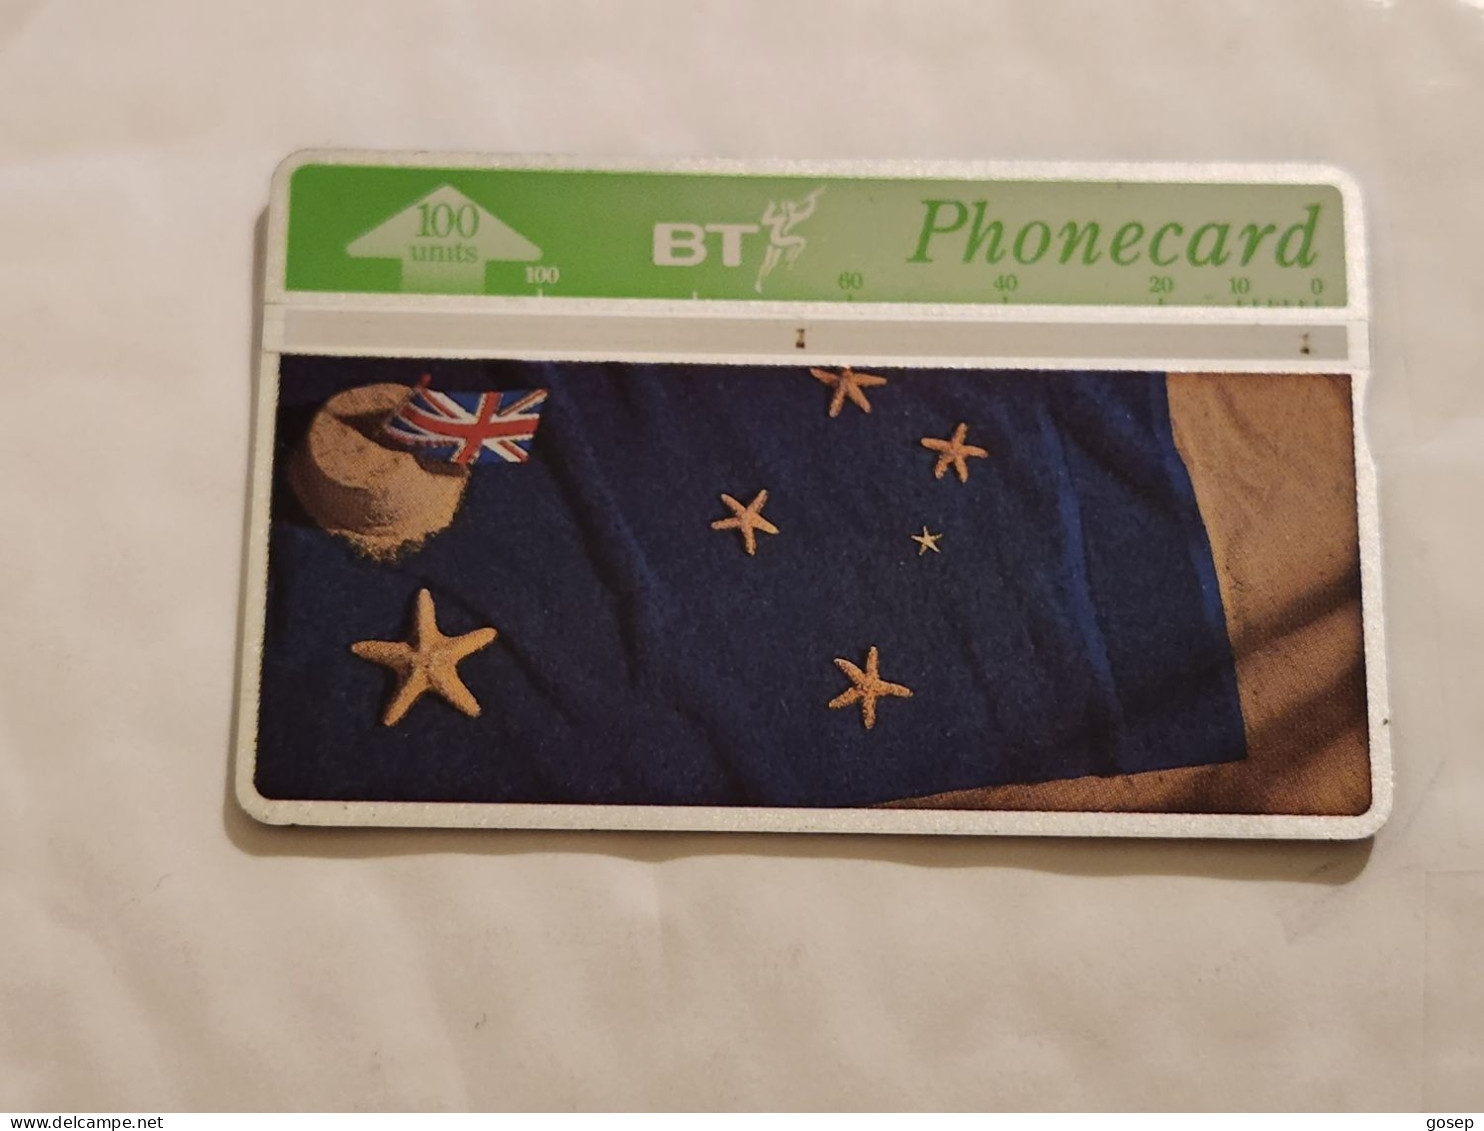 United Kingdom(BTC158)Flying The Flag 4(AUSTRALIA)(1045)(100units)(526H33634)price Cataloge6.00£+1card Prepiad Free - BT Commemorative Issues